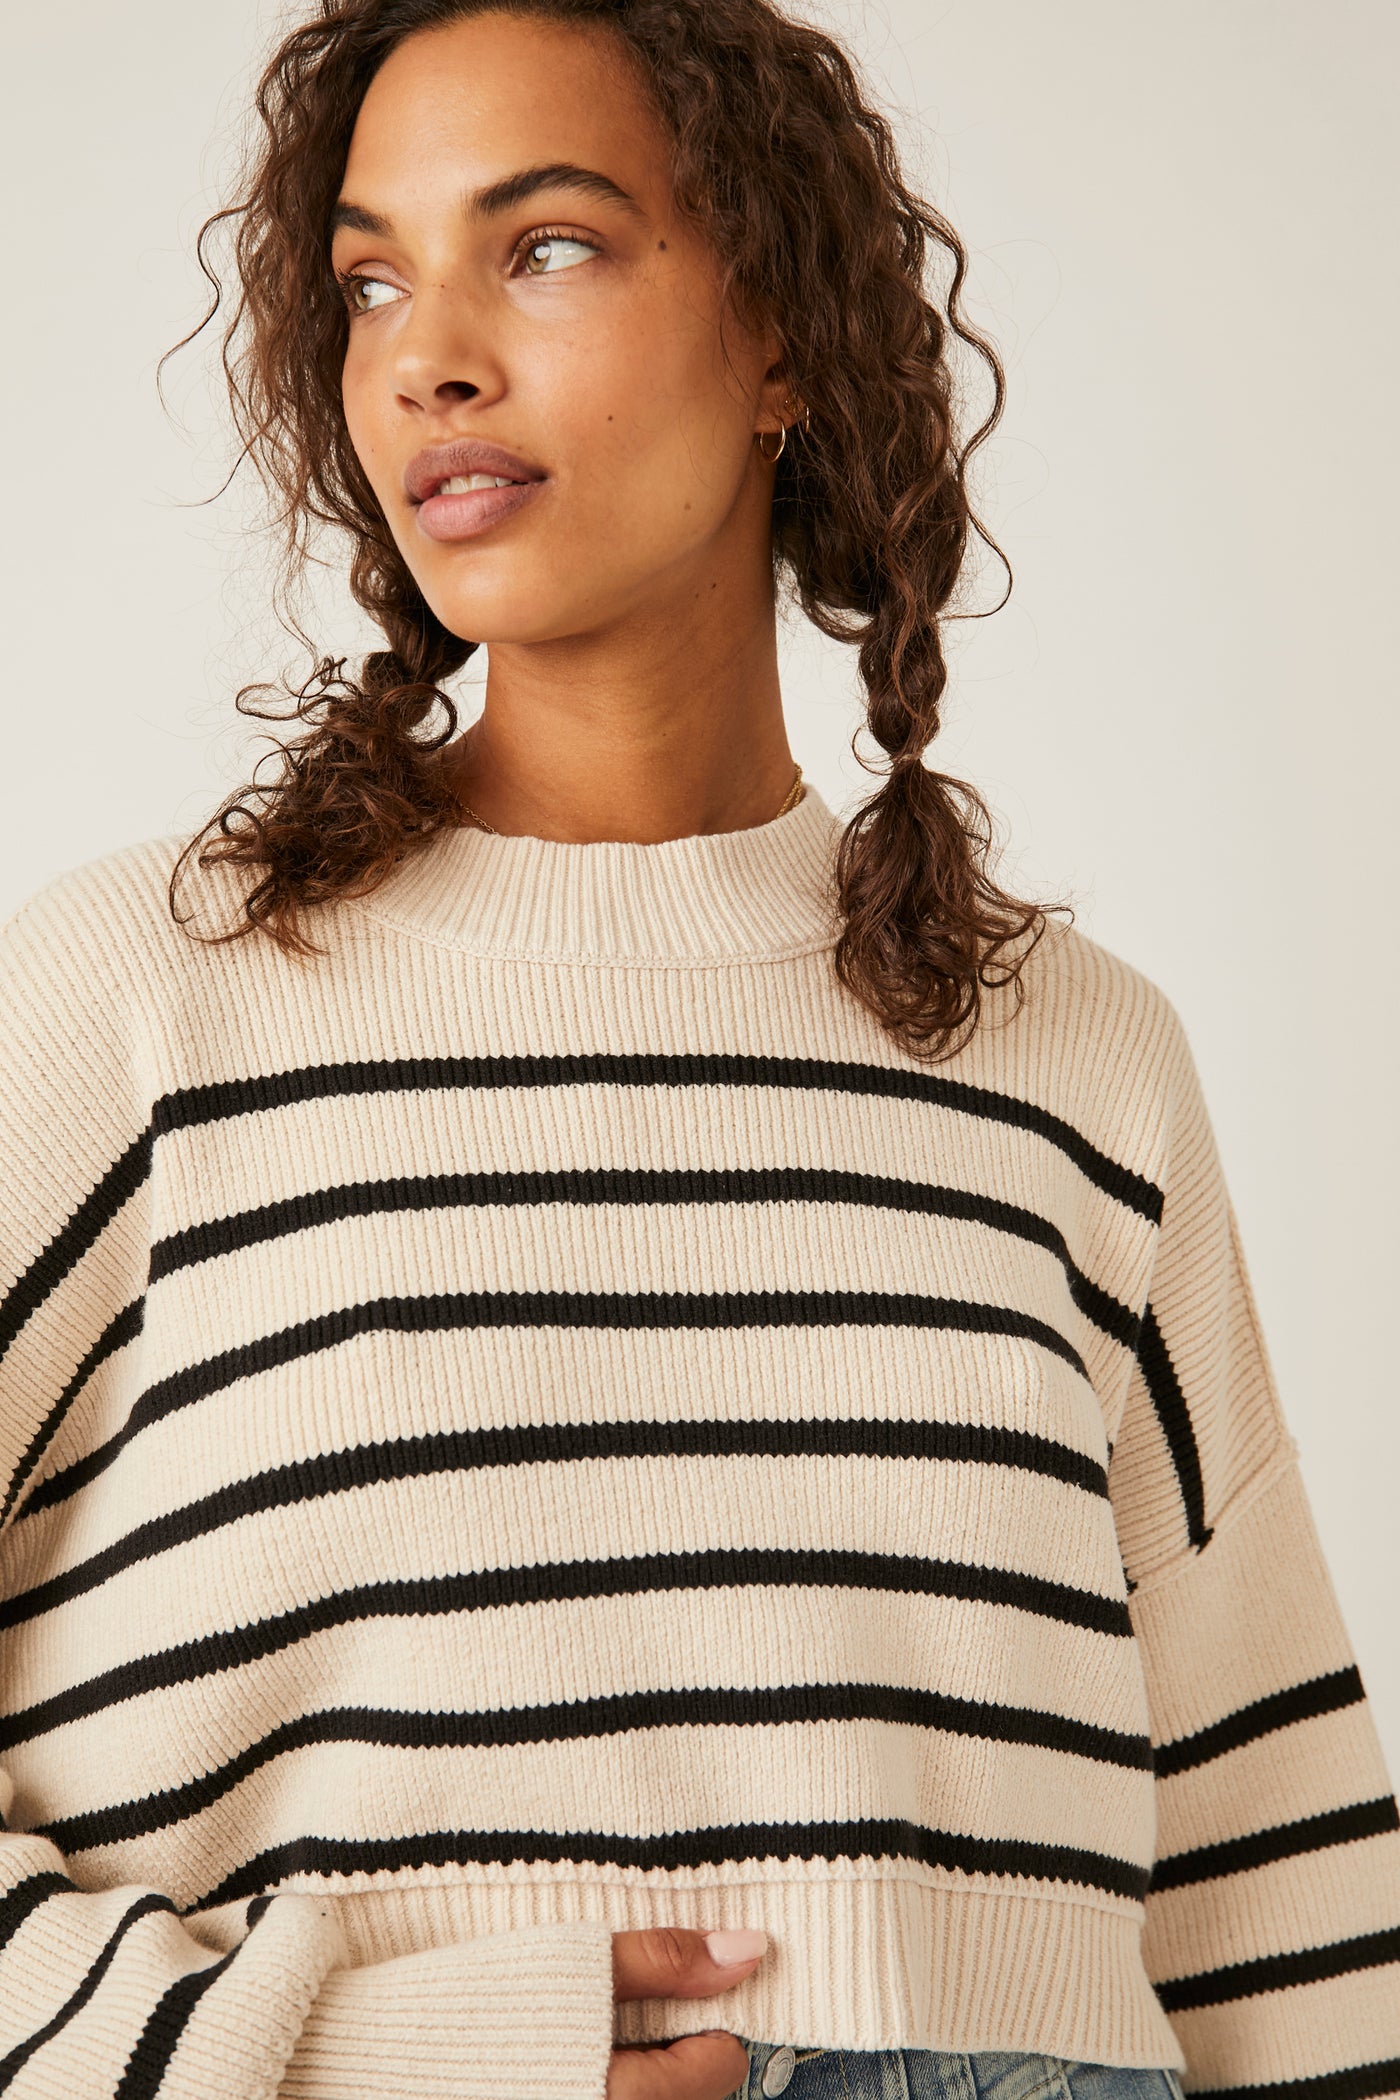 Easy Street Stripe Crop Pullover - Cream and Black